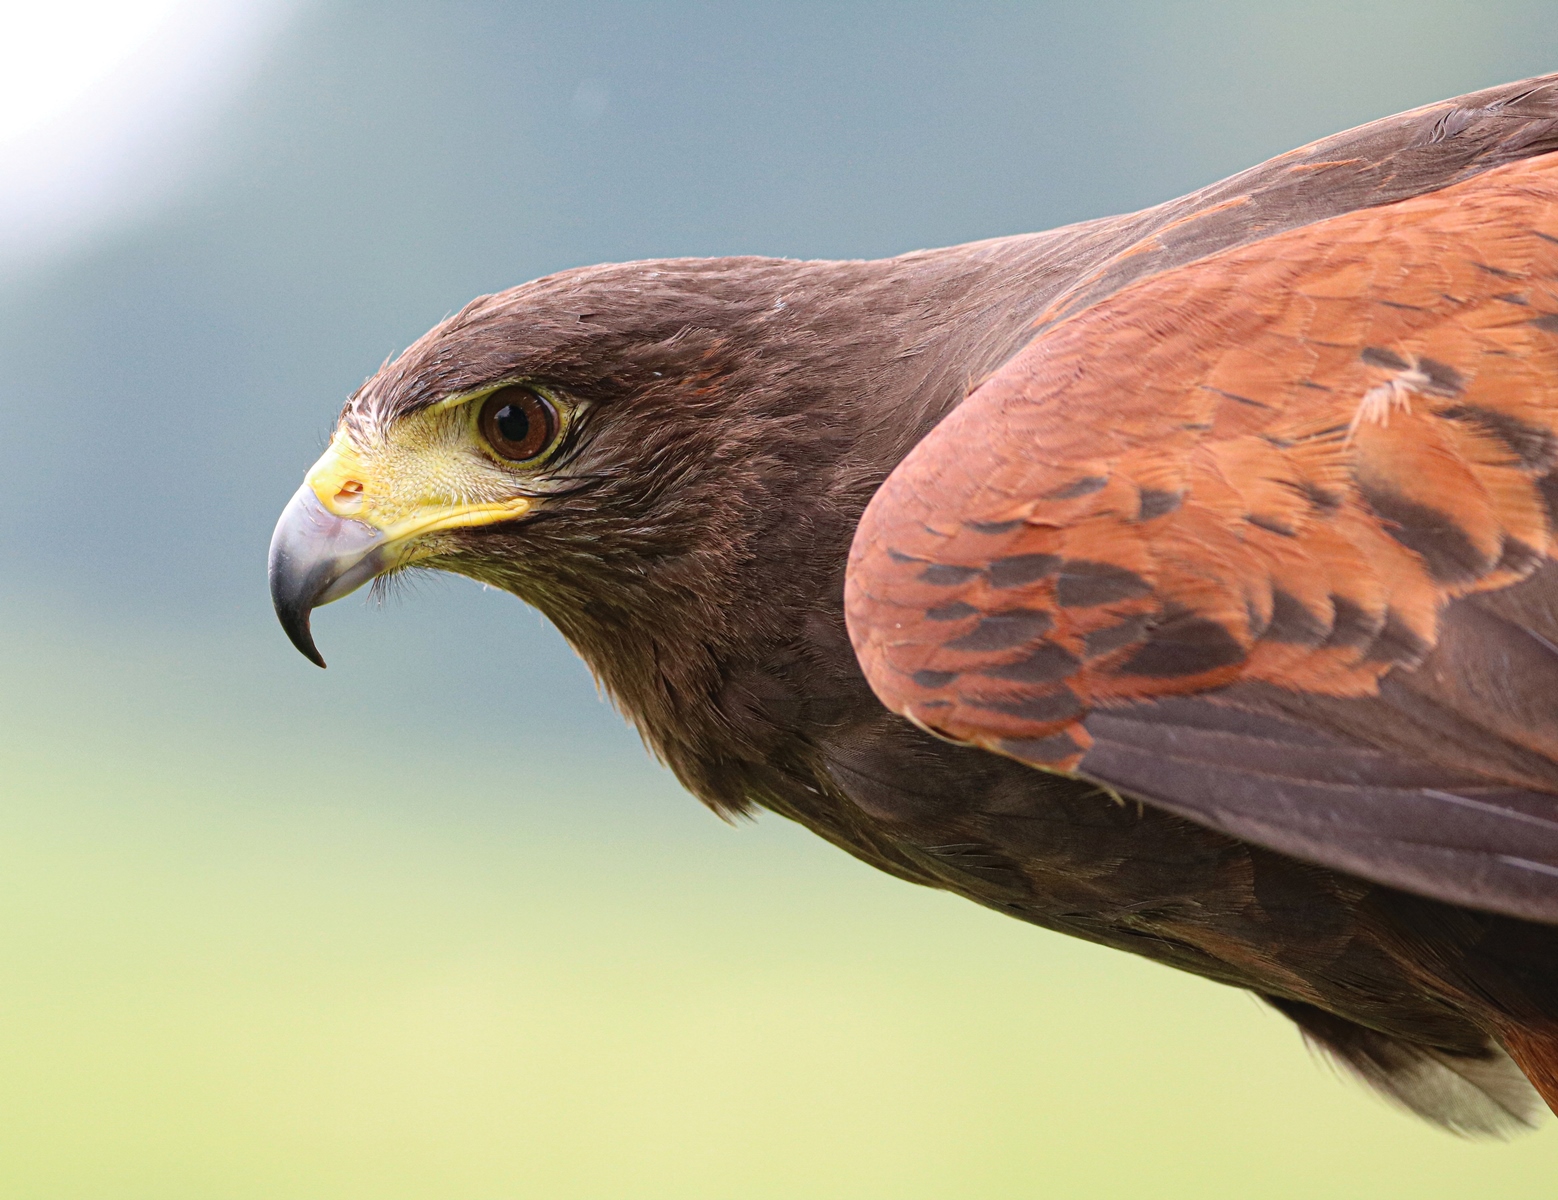 Closeup of a Harris's hawk